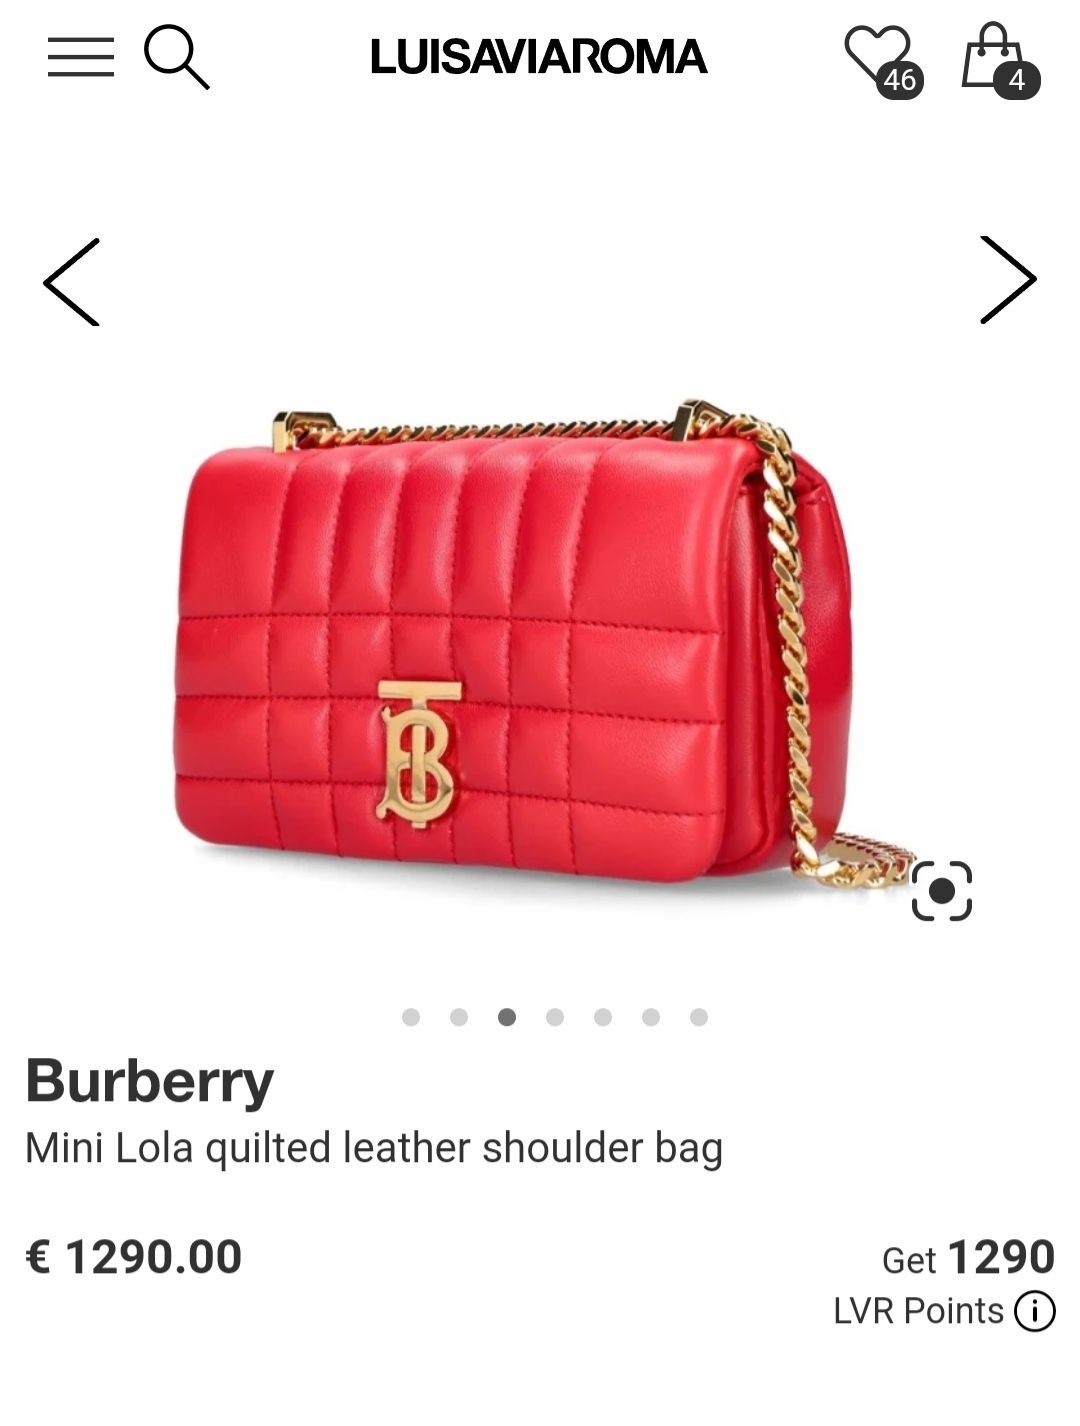 BURBERRY Lola малка яркочервена чанта естествена кожа златист синджир